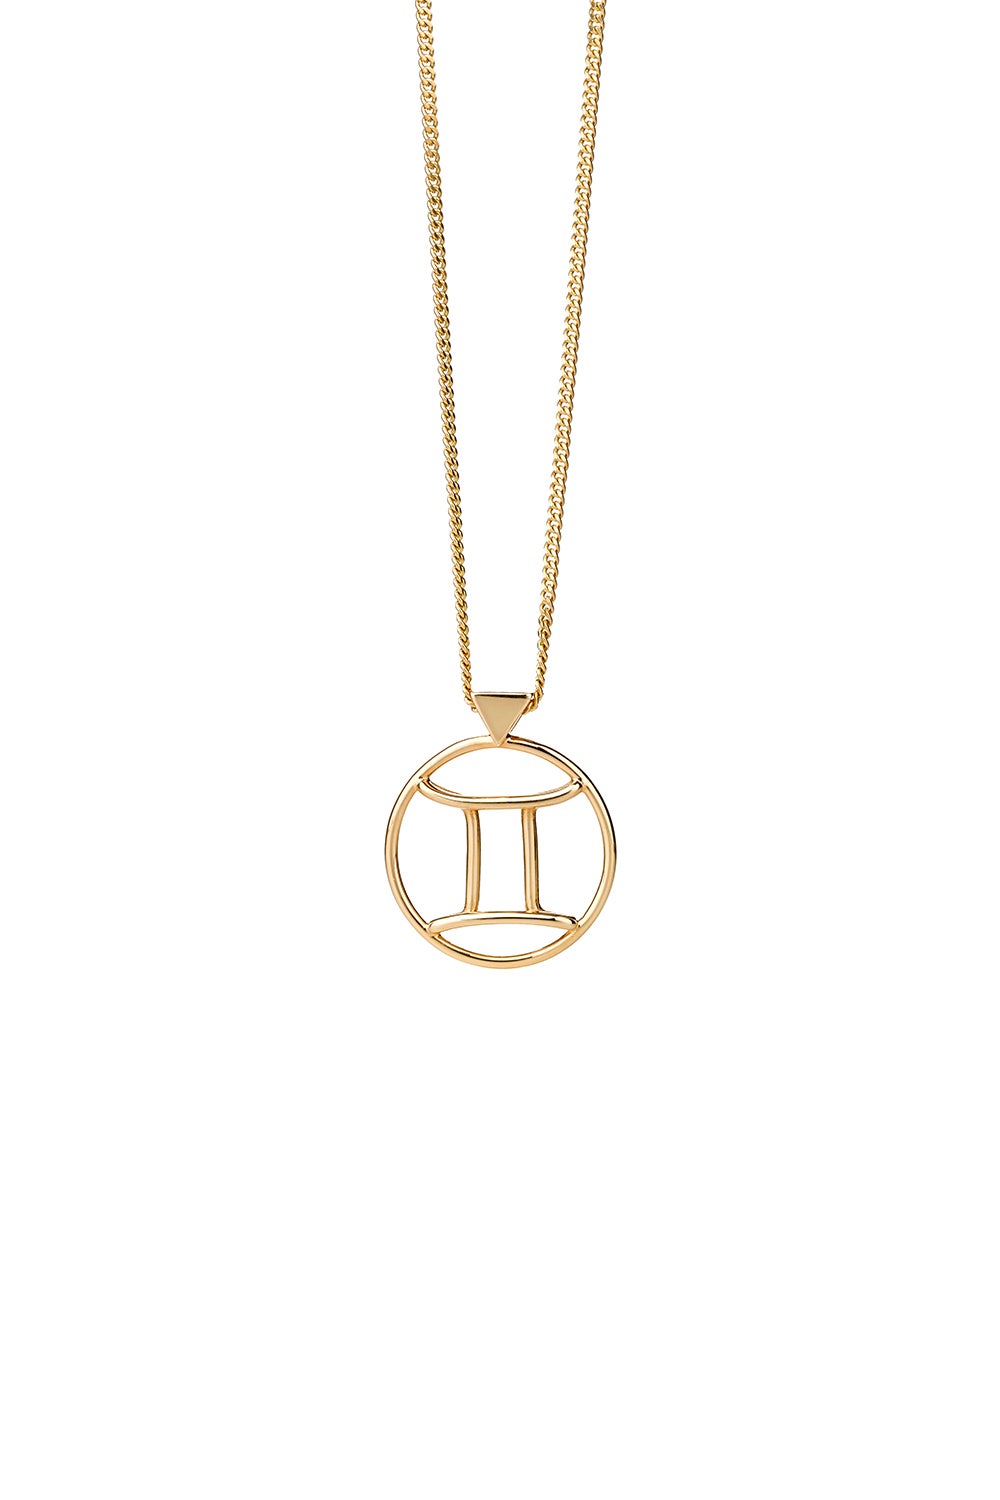 Brooke Gregson Gold Gemini Astrology Diamond Necklace | Liberty